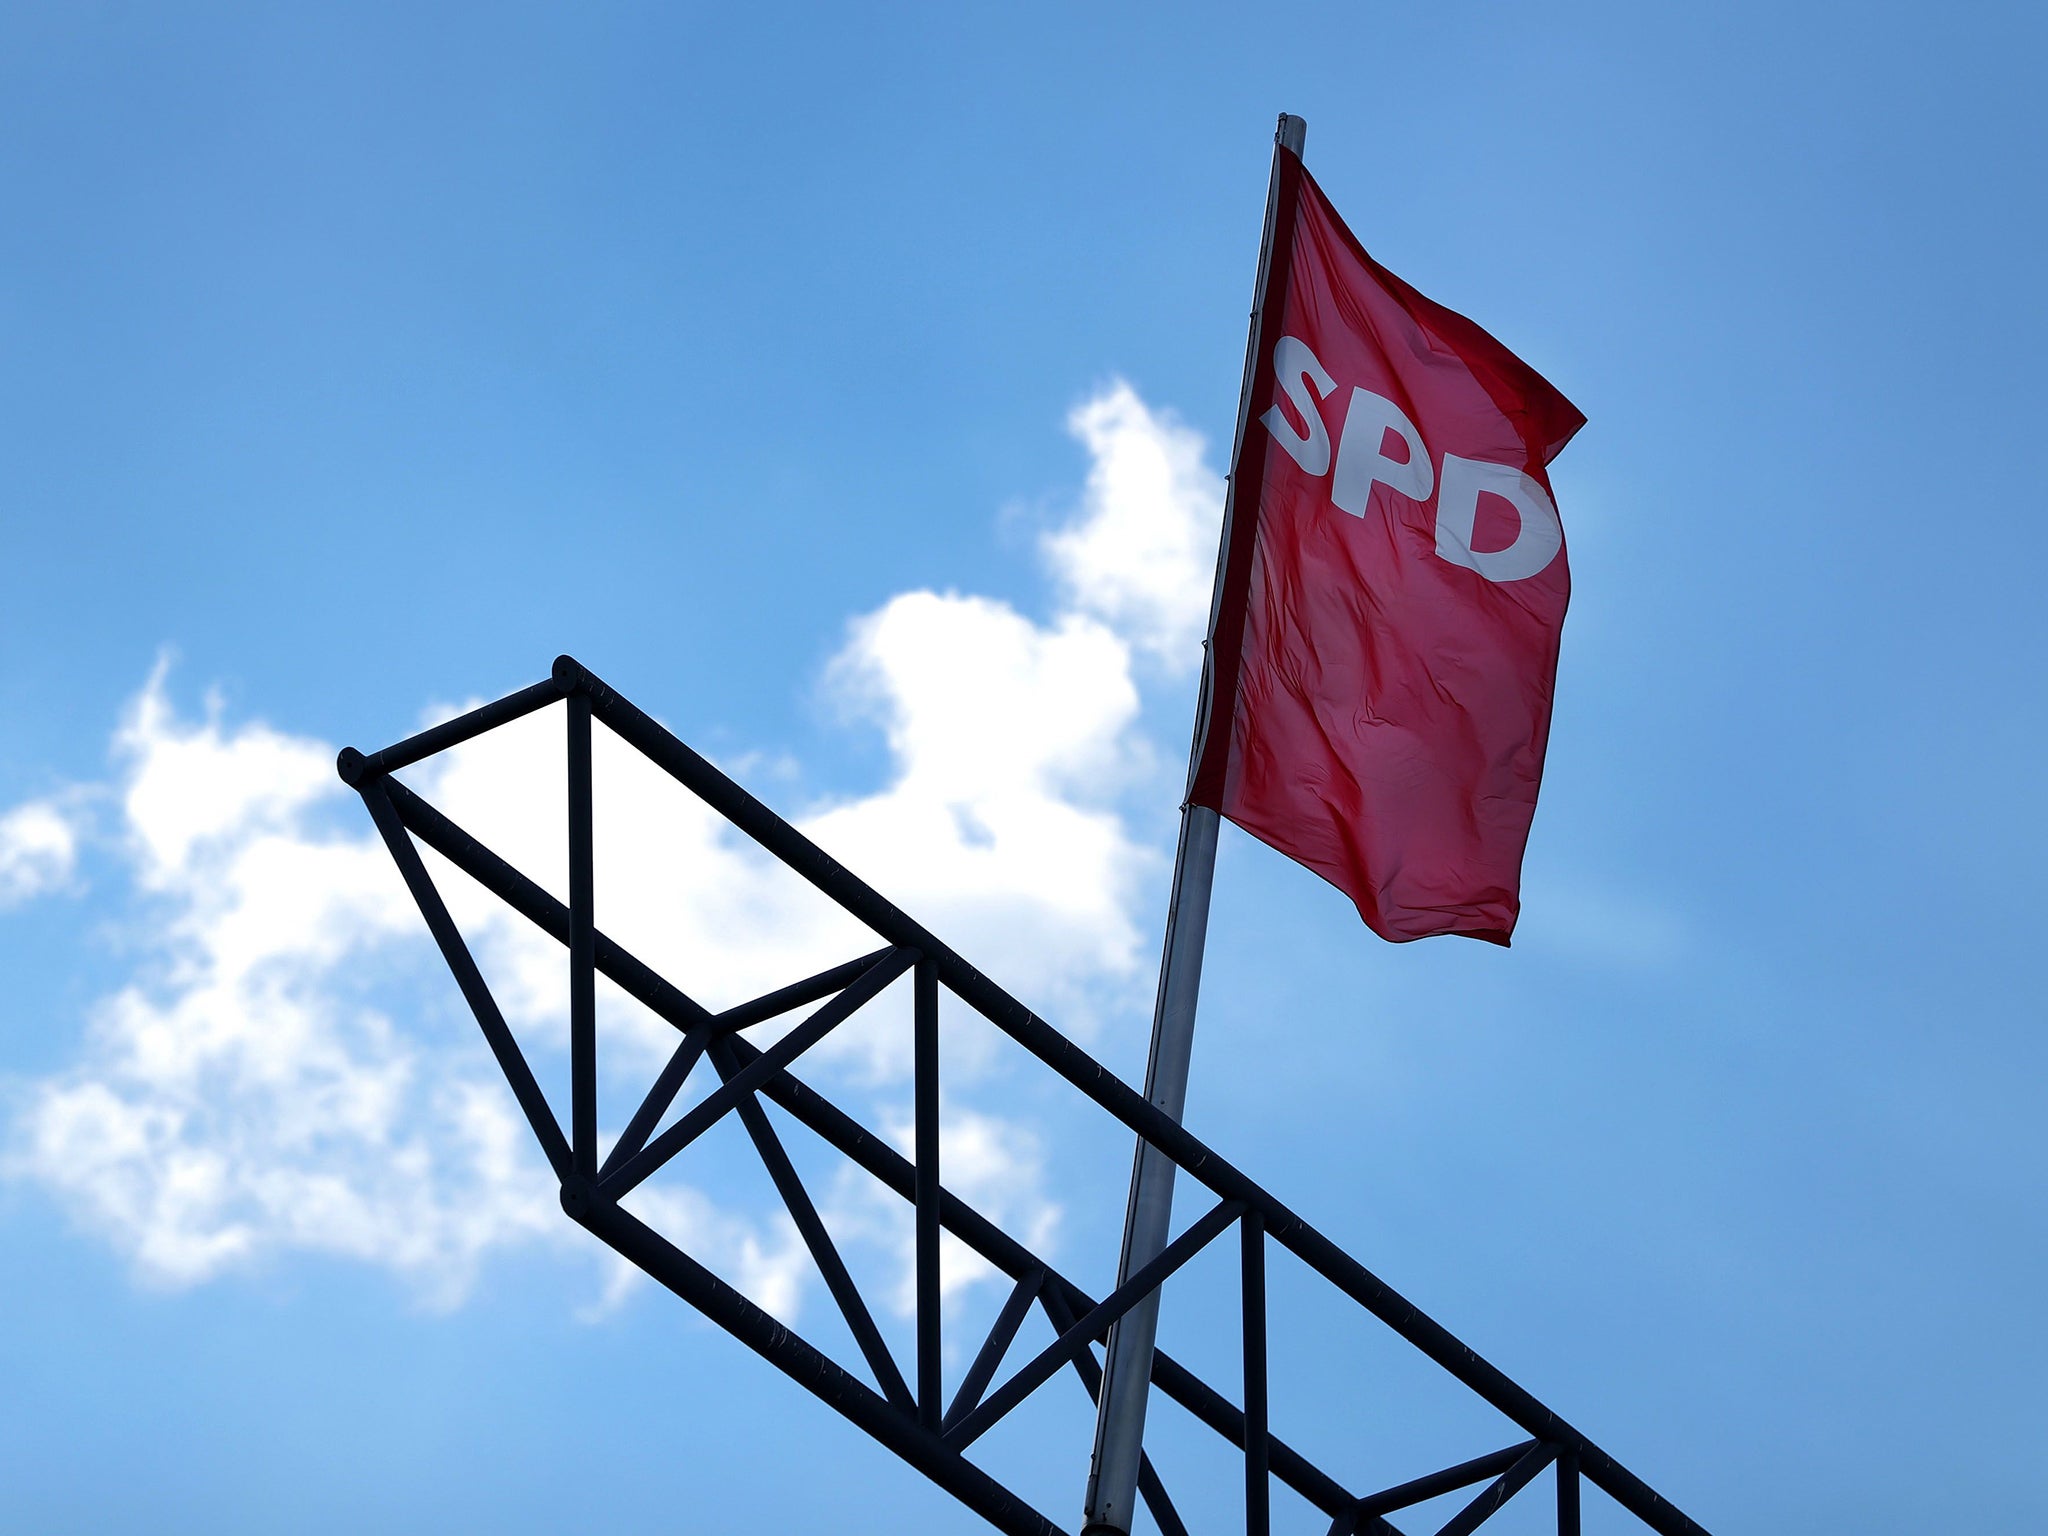 A flag flies over the Social Democrat Party (SPD) headquarters in Berlin